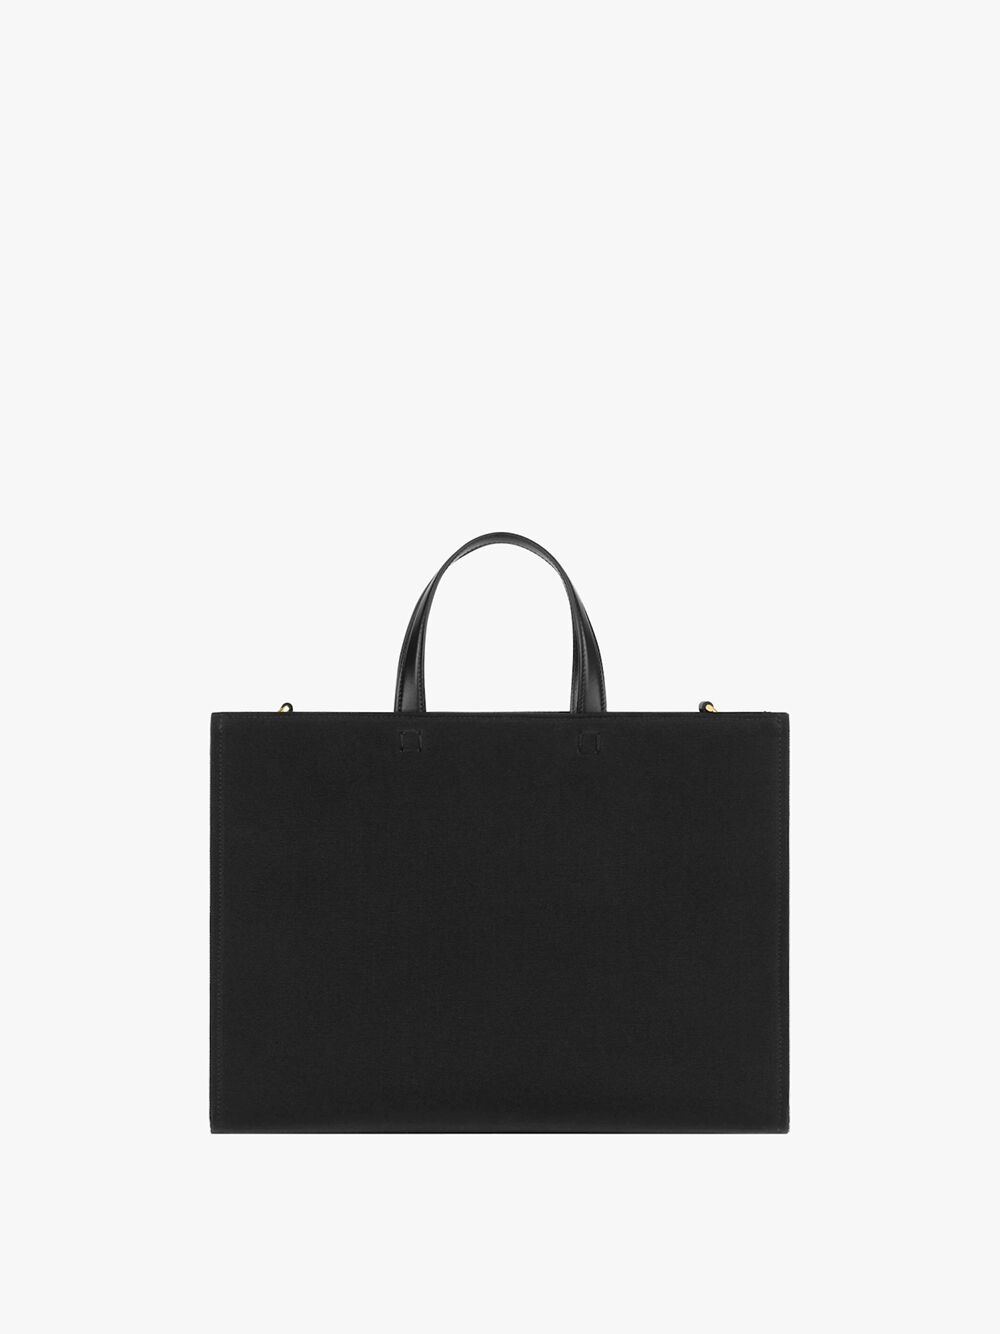 Medium g tote shopping bag - 4